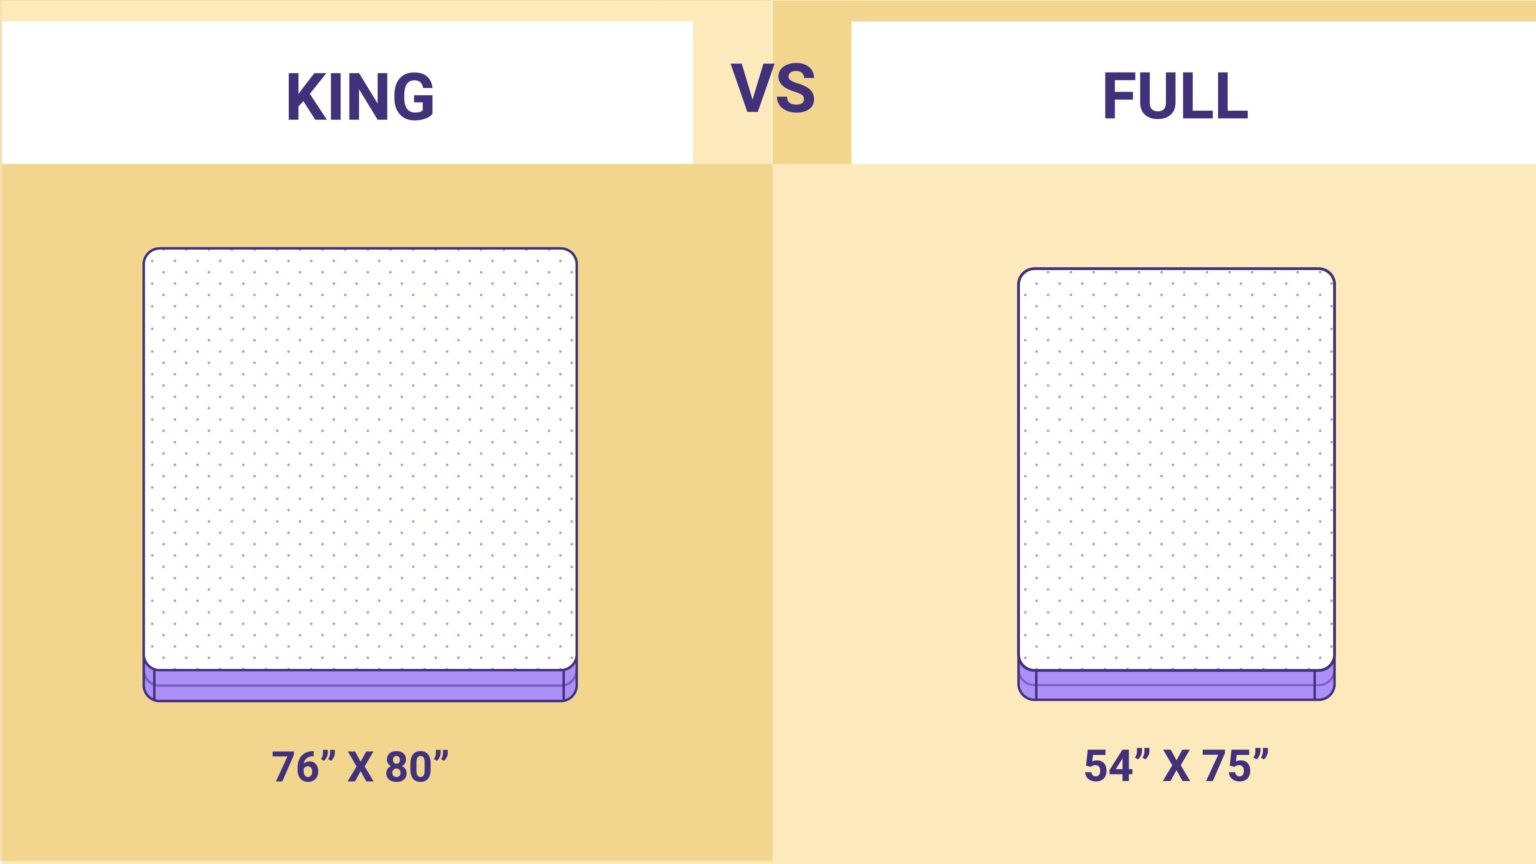 king size mattress us vs mexico